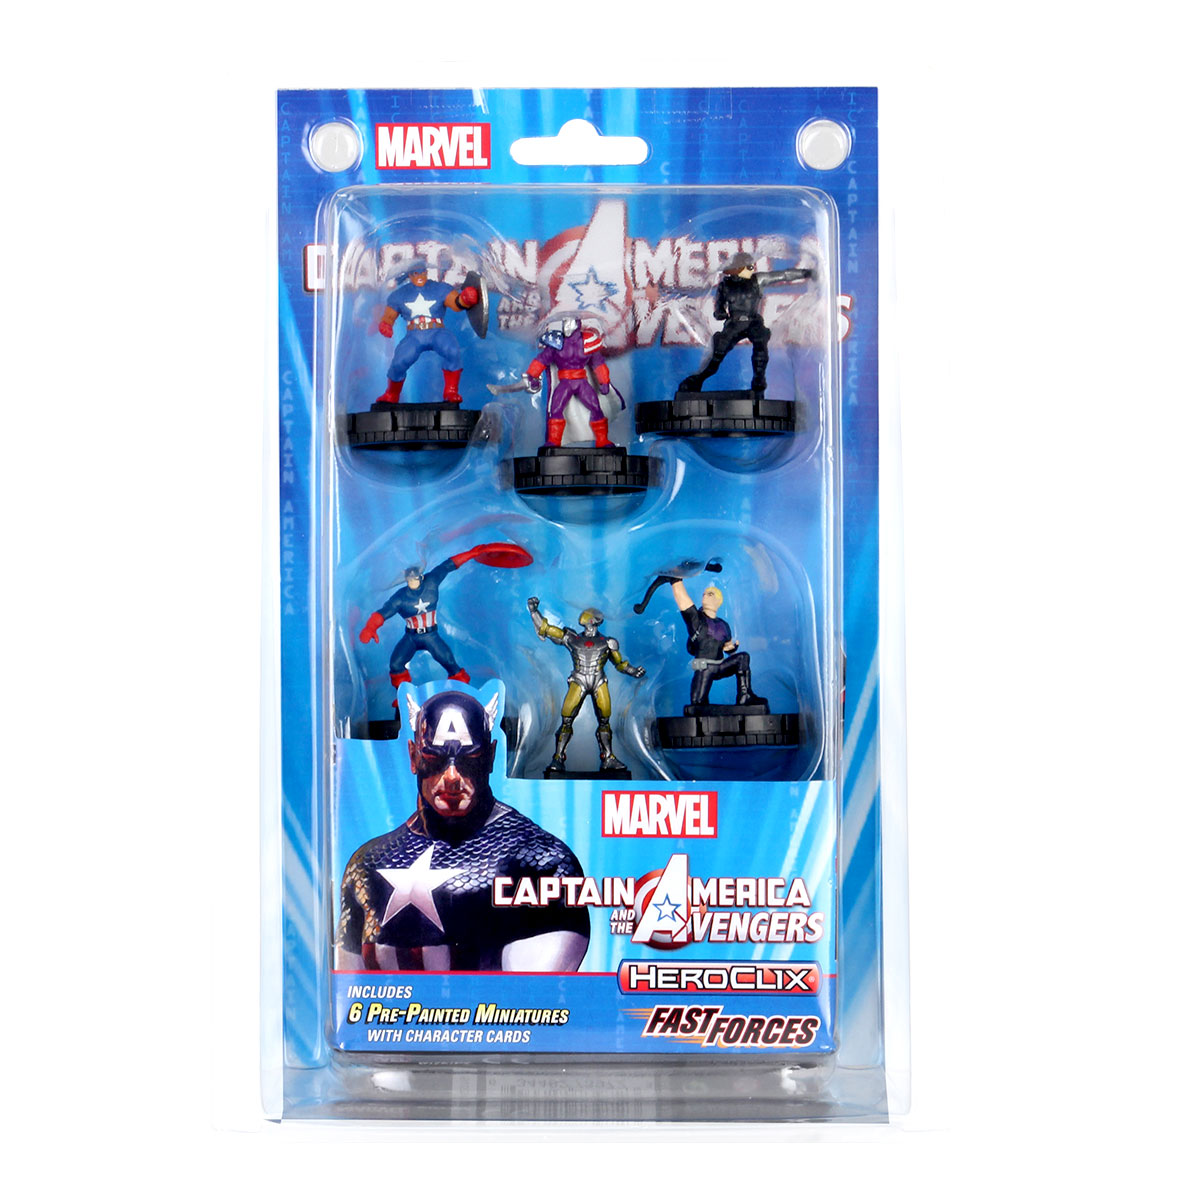 Heroclix Captain America set Dirk Anger #047 Rare figure w/card! 